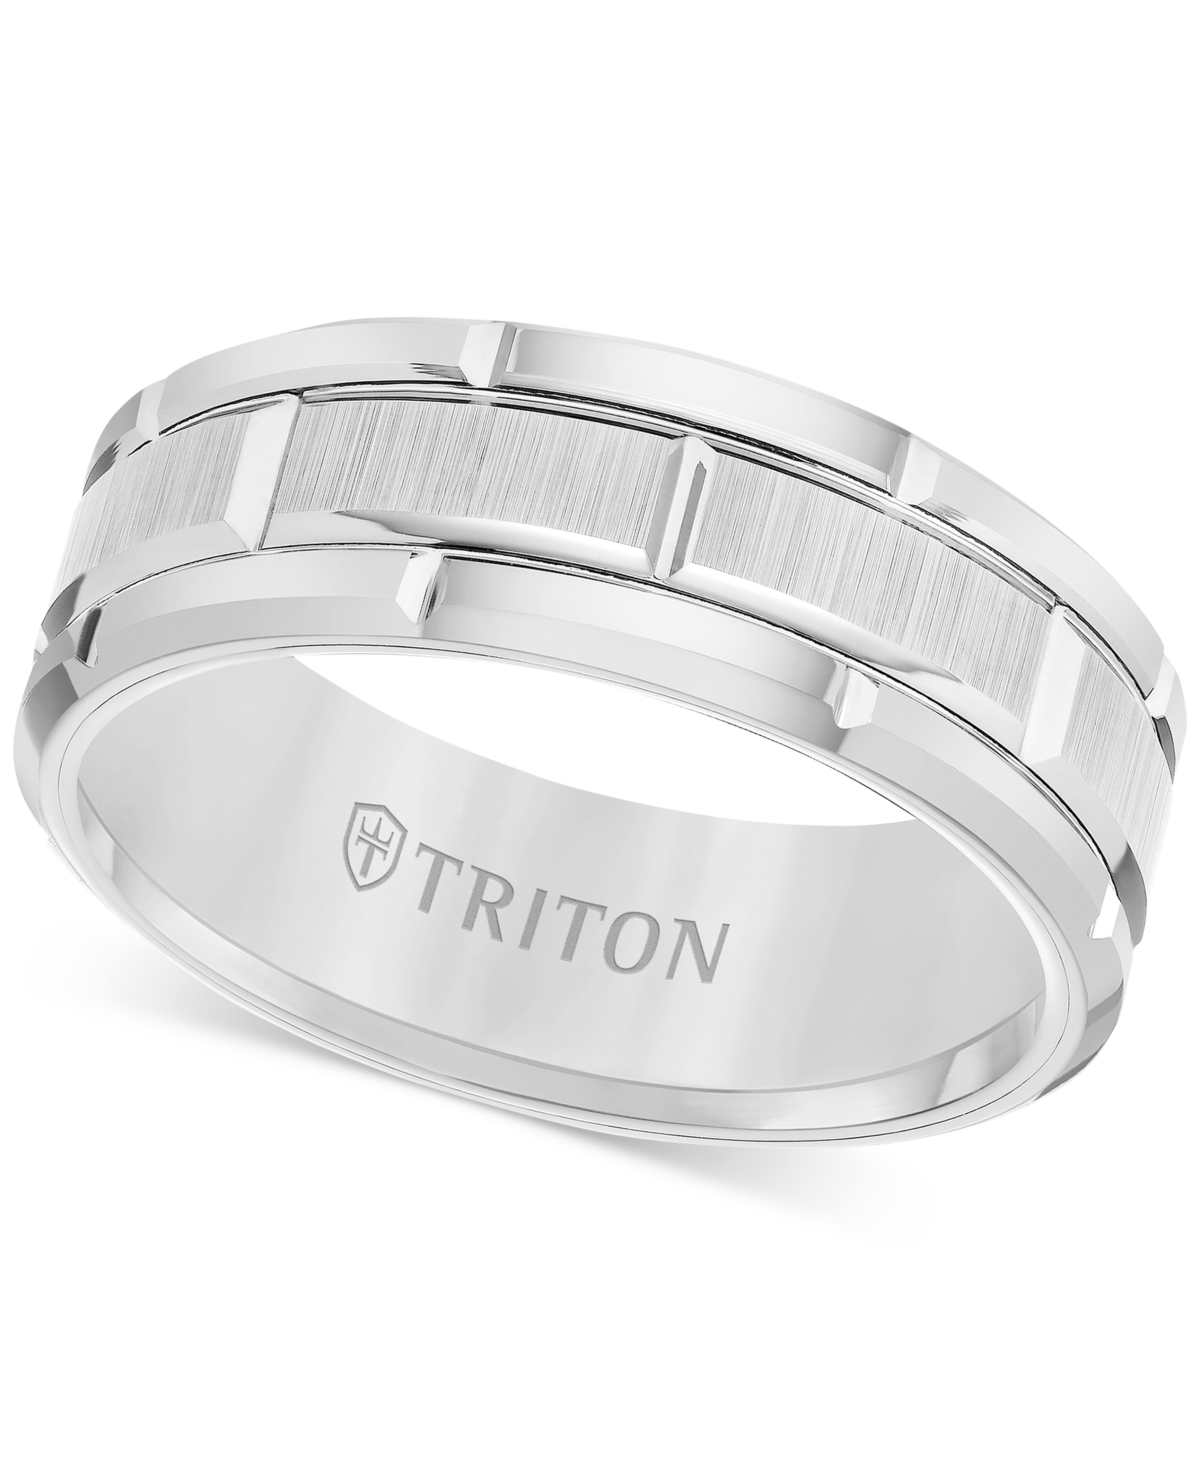 Diagonal Cut Center  Wedding Band Size 8MM Tungsten Carbide Ring Details about   TRITON 